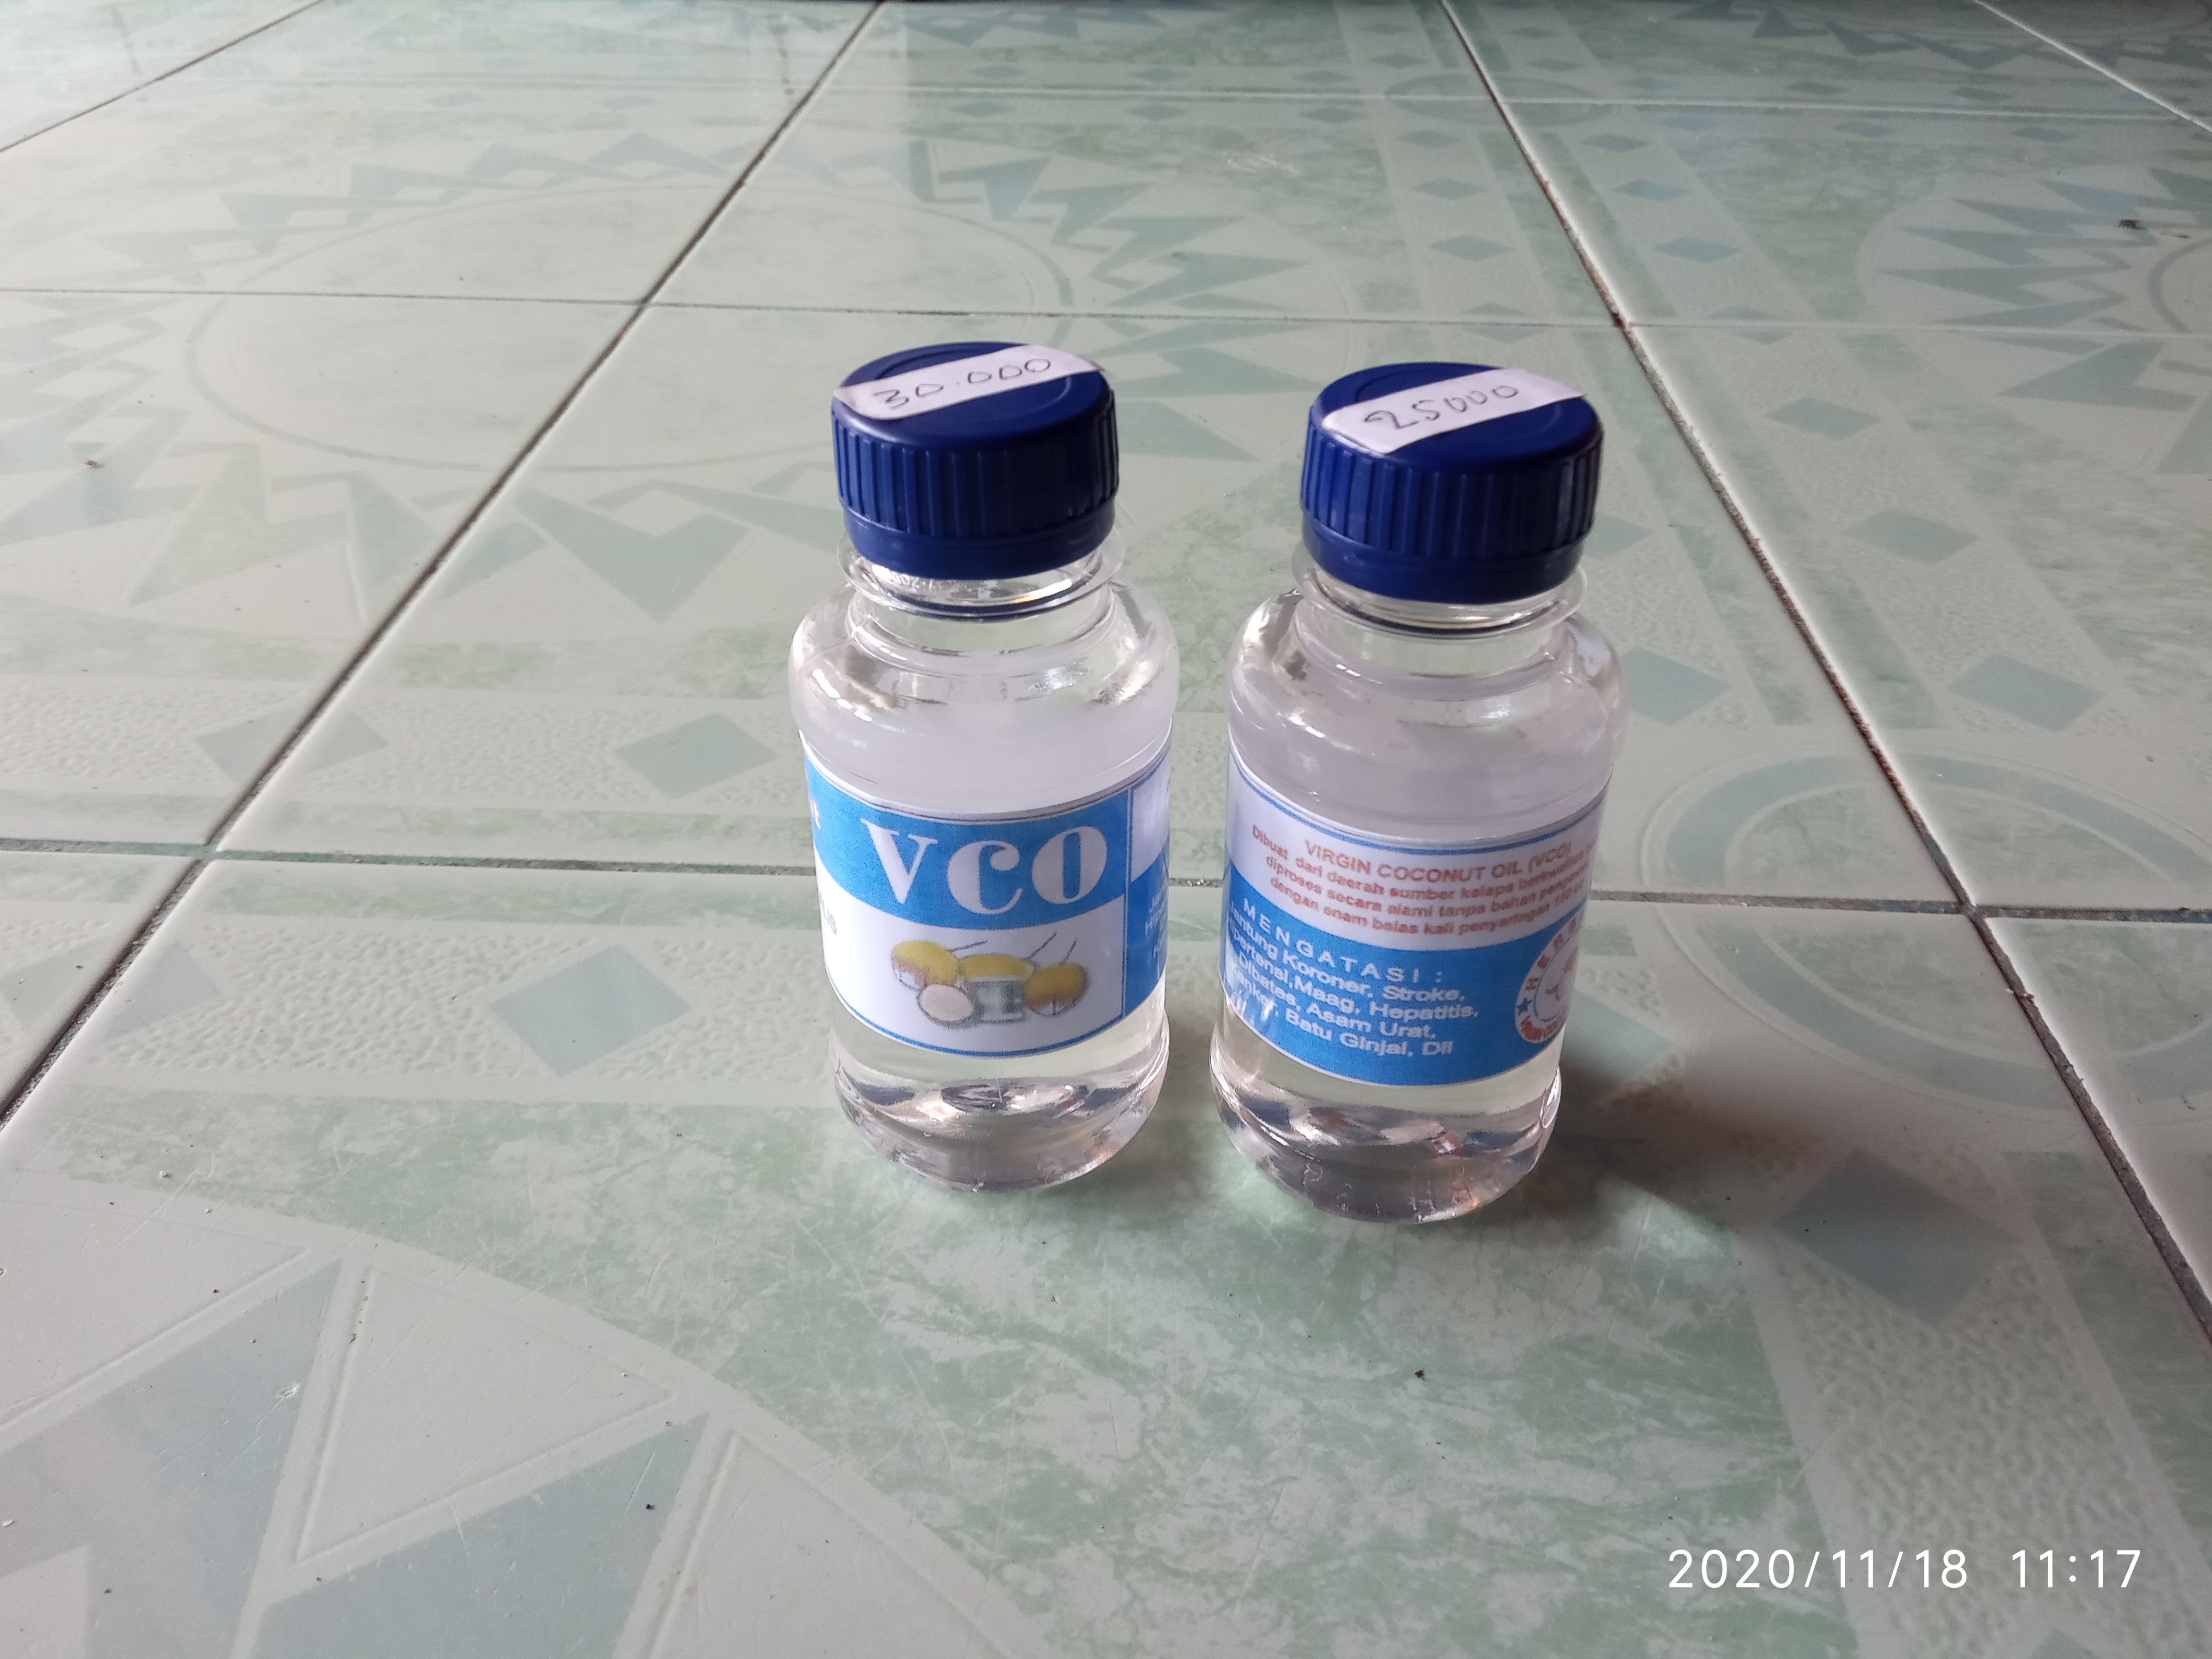 Minyak VCO - Virgin Coconut Oil